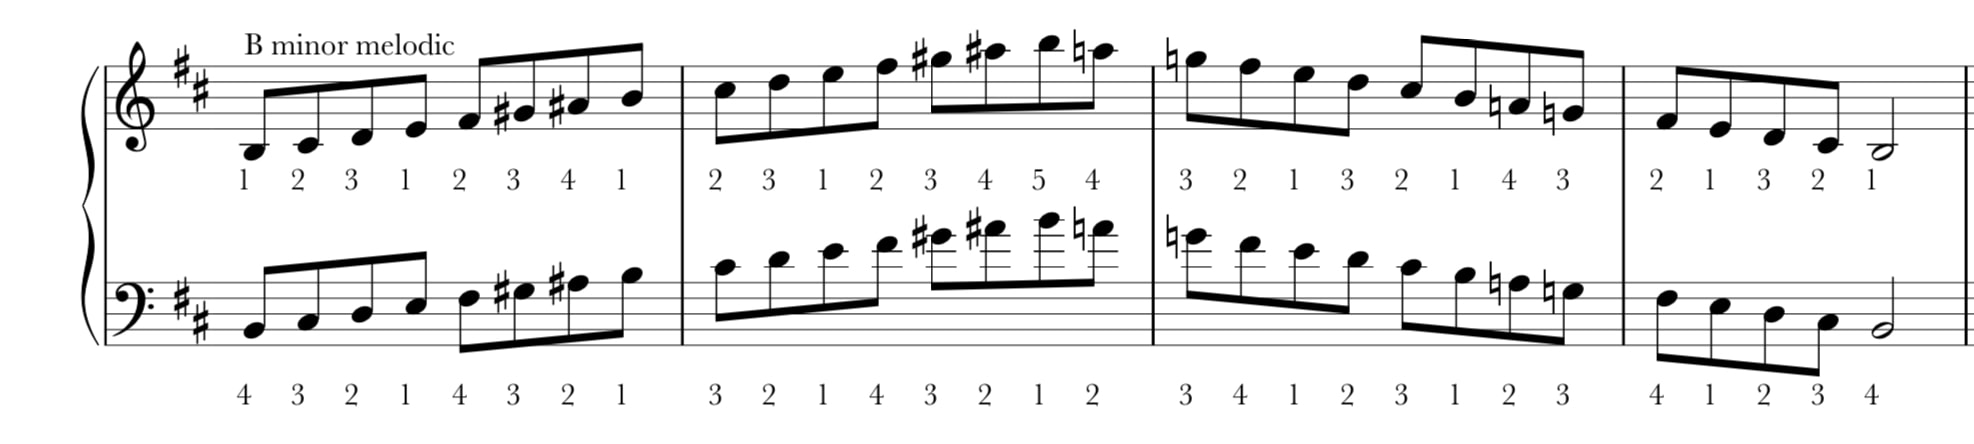 melodic minor scale b flat